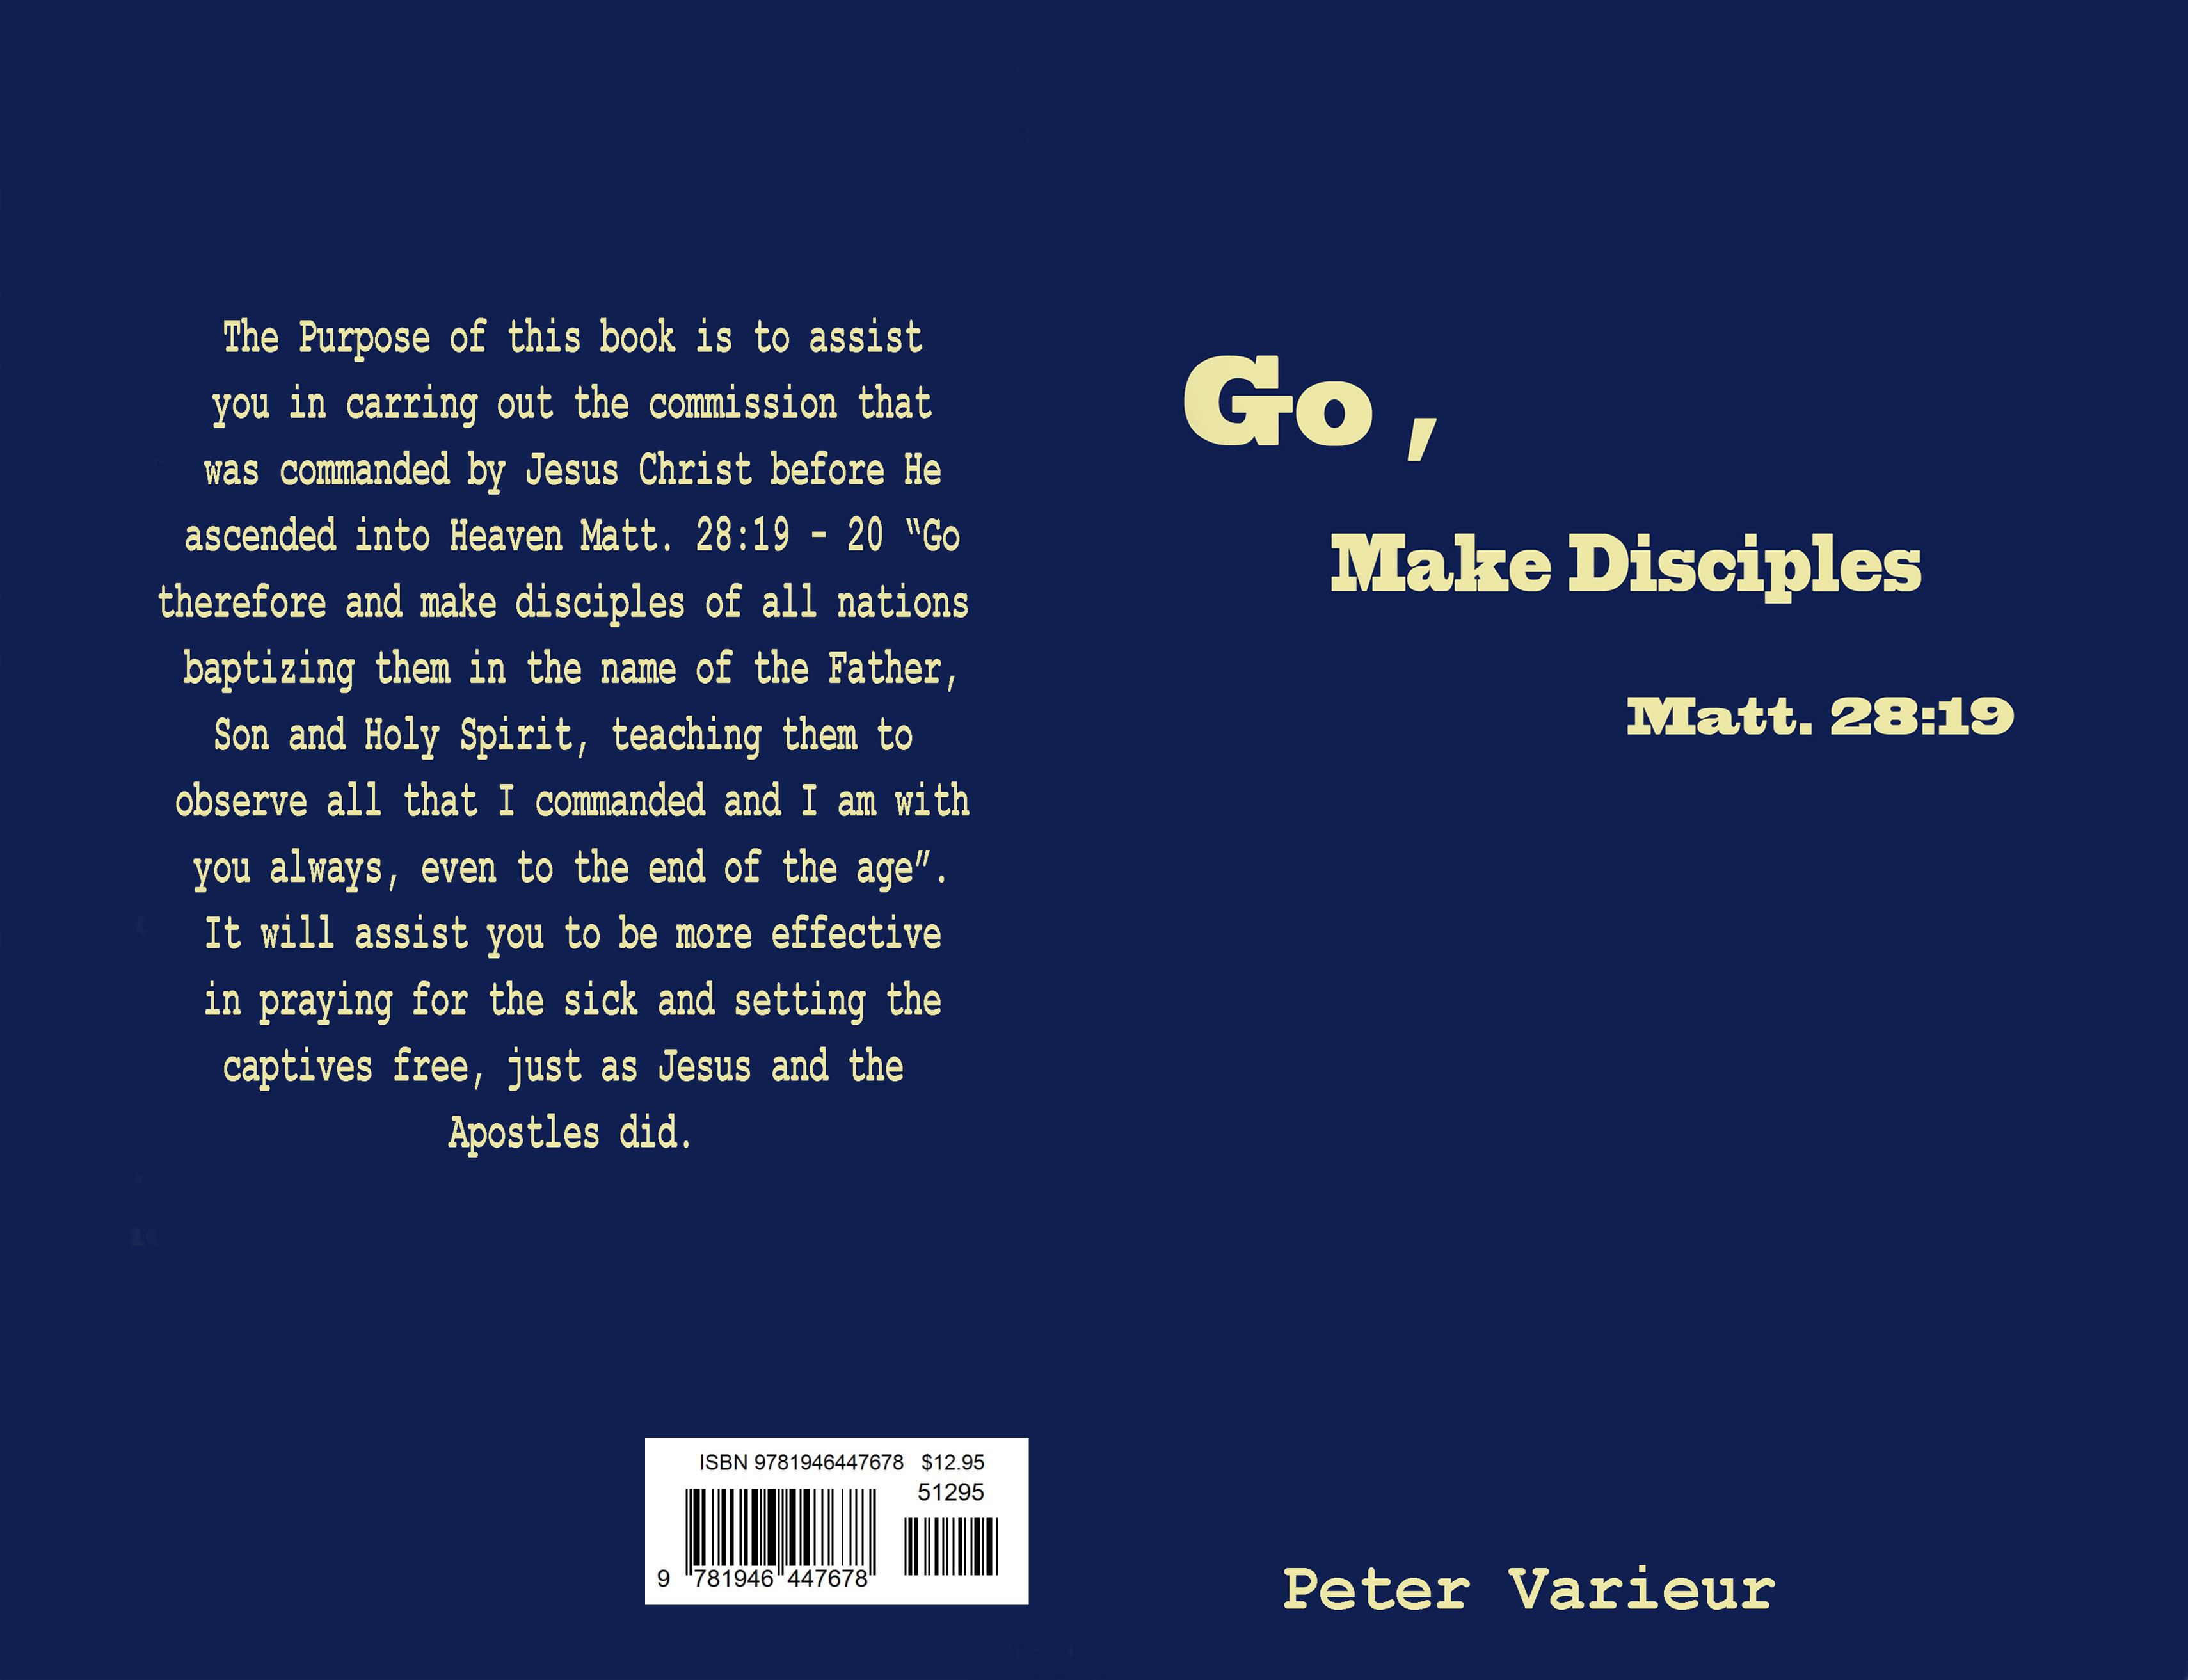 Go, Make Disciples Matt. 28:19 cover image